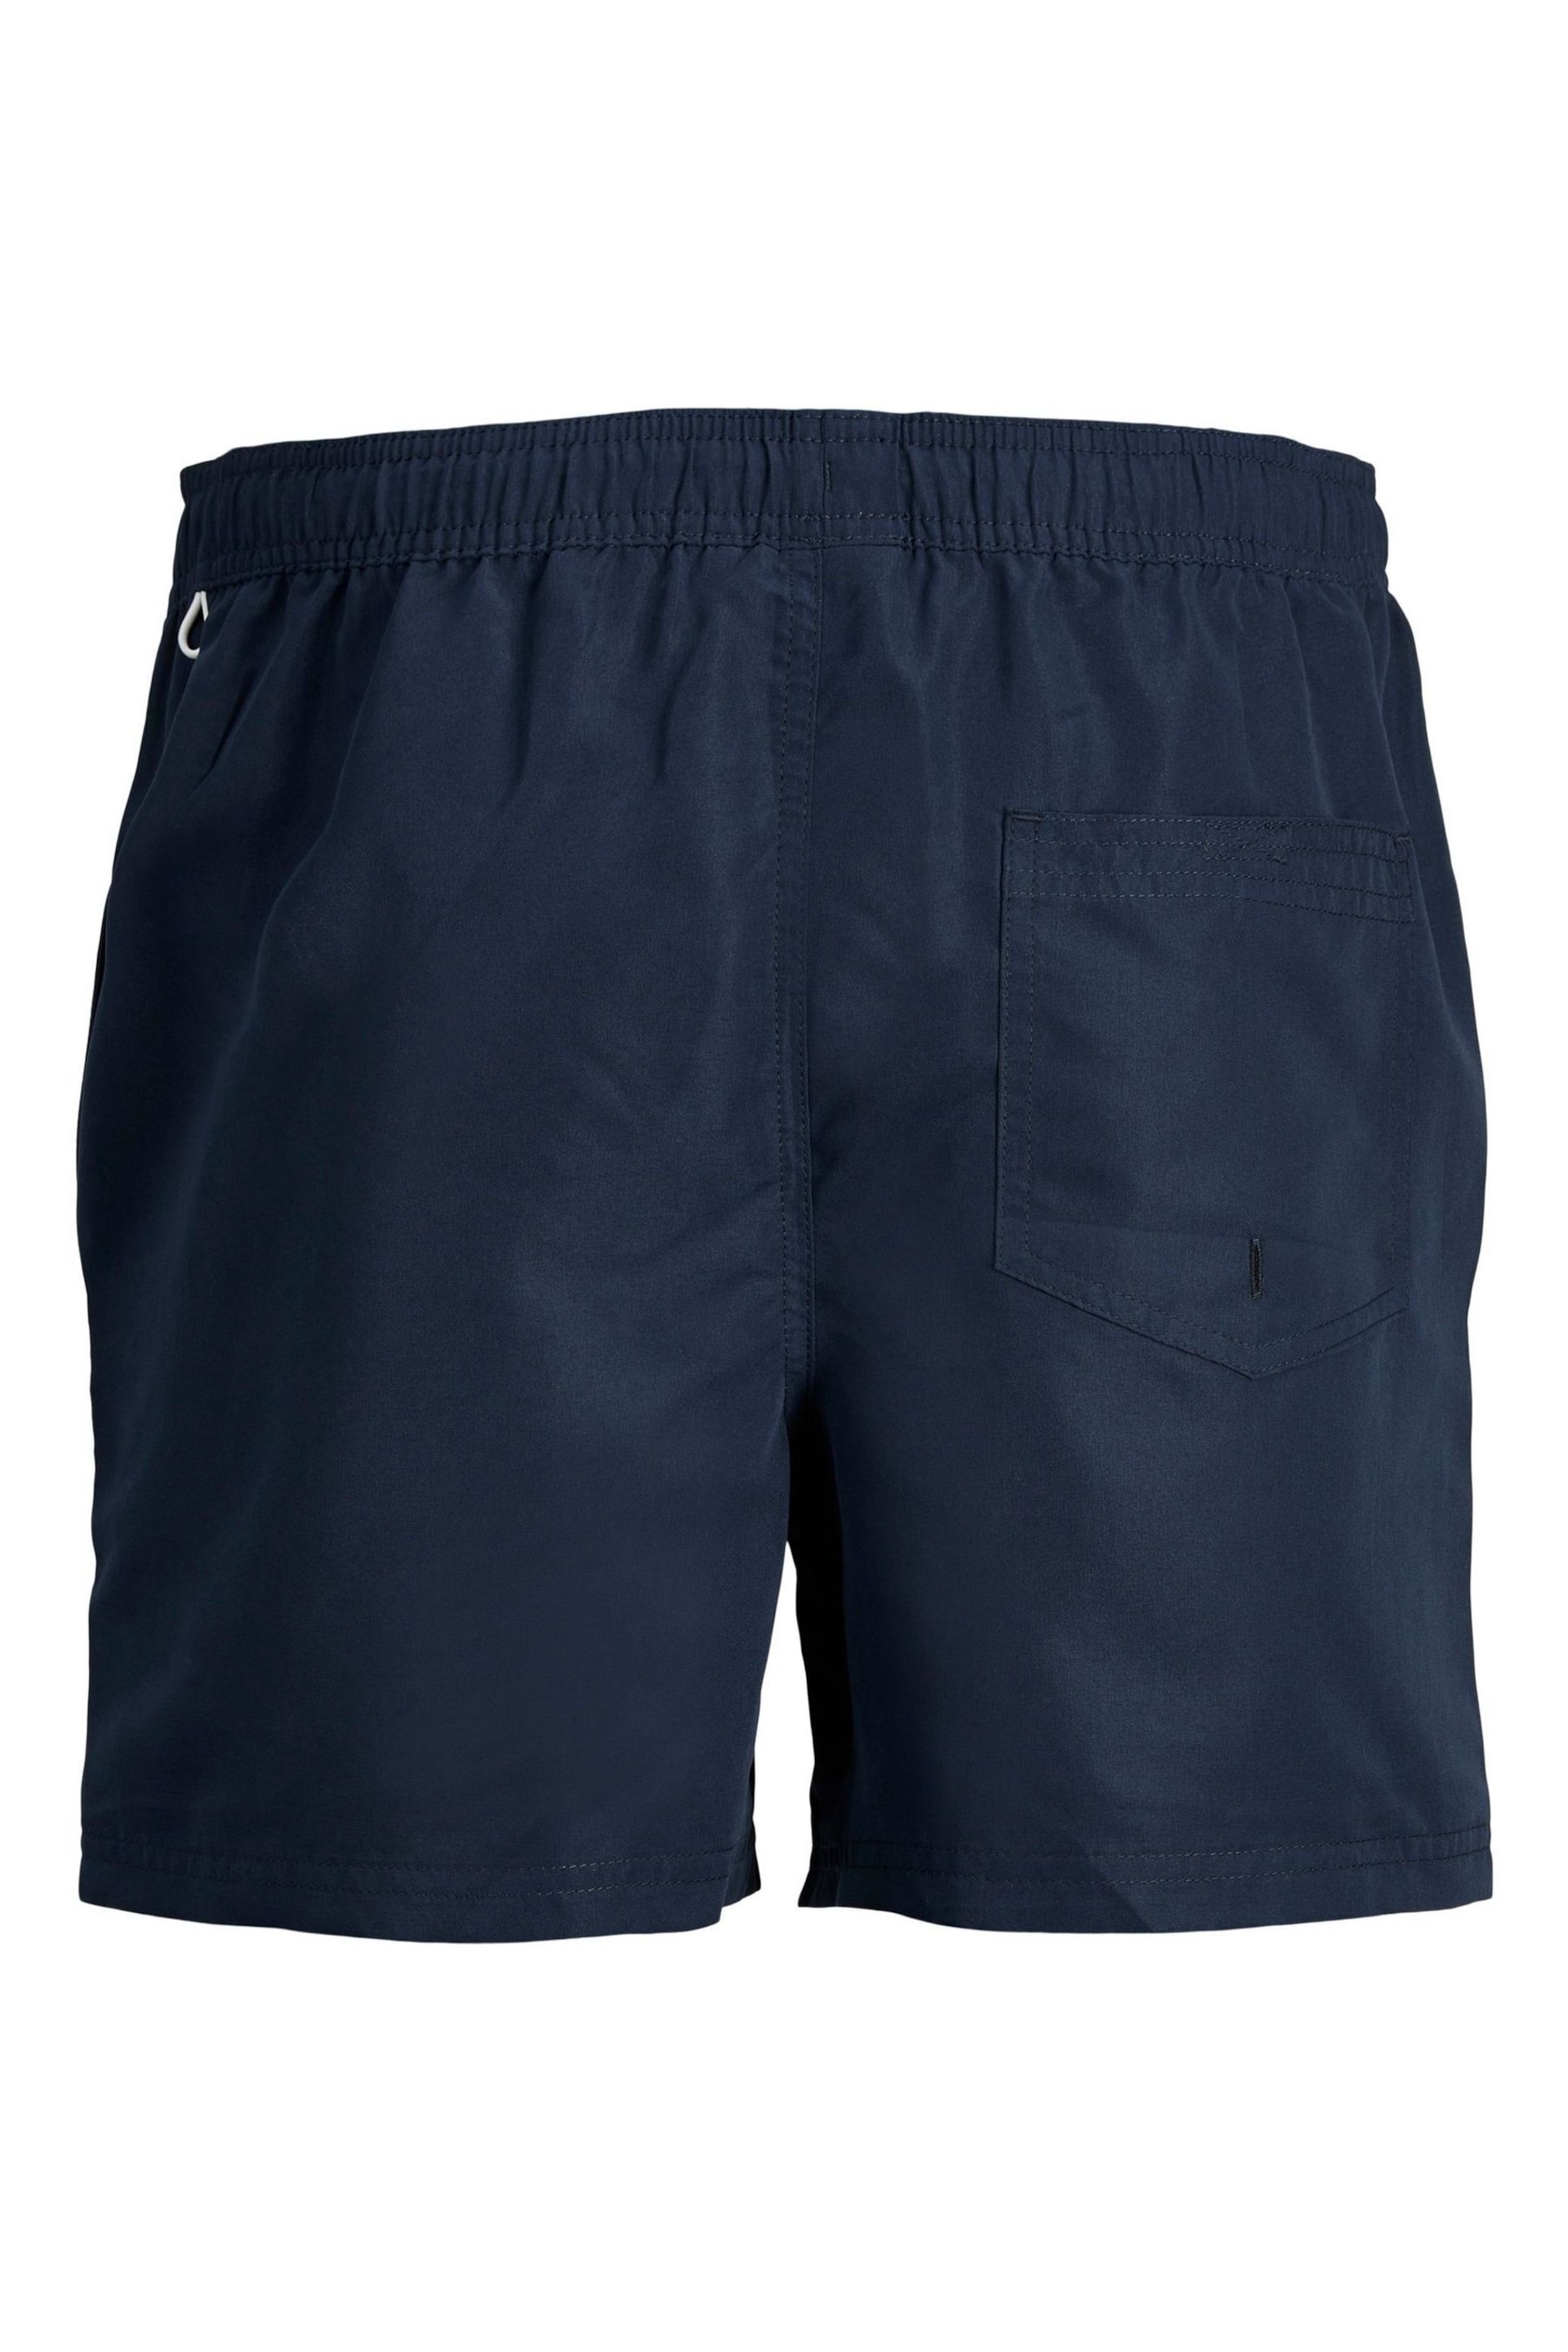 JACK & JONES Blue Swim Shorts With Contrast Lining - Image 7 of 7